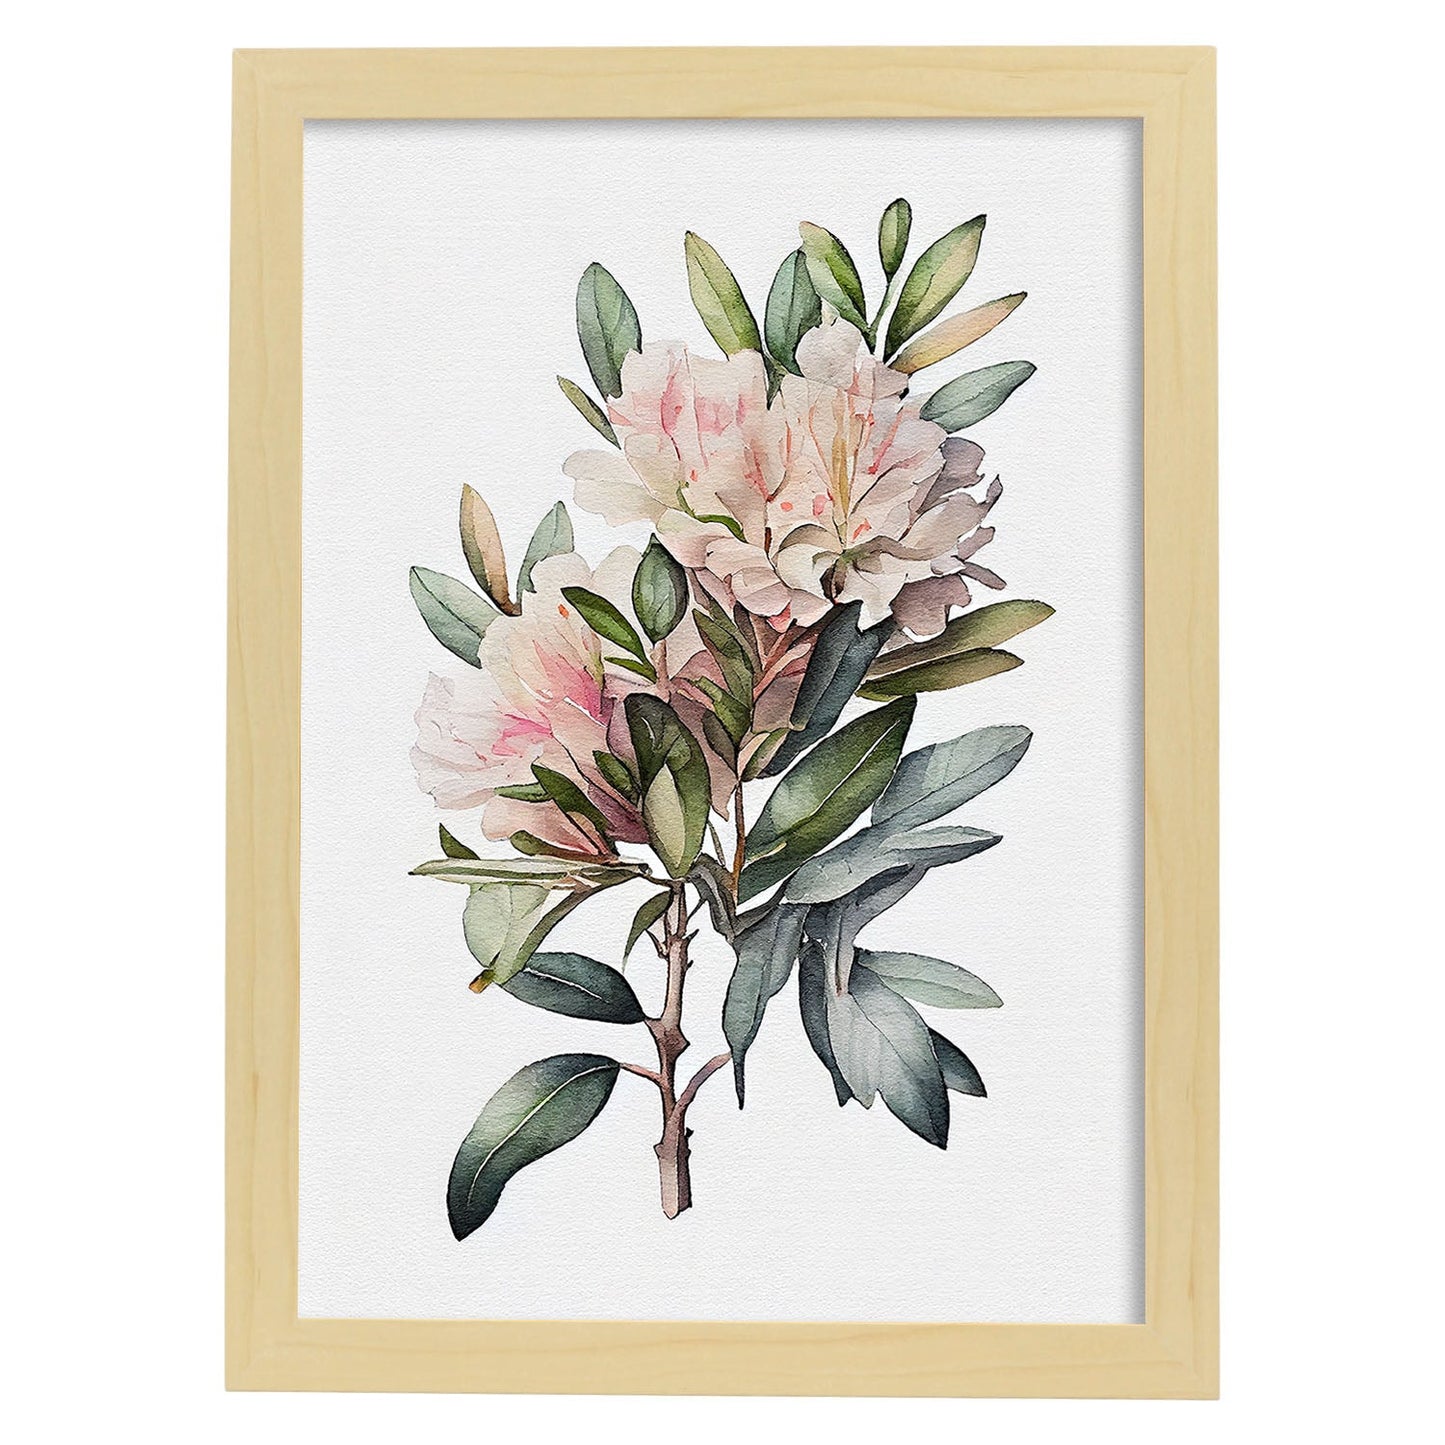 Nacnic watercolor minmal Rhododendron_2. Aesthetic Wall Art Prints for Bedroom or Living Room Design.-Artwork-Nacnic-A4-Marco Madera Clara-Nacnic Estudio SL